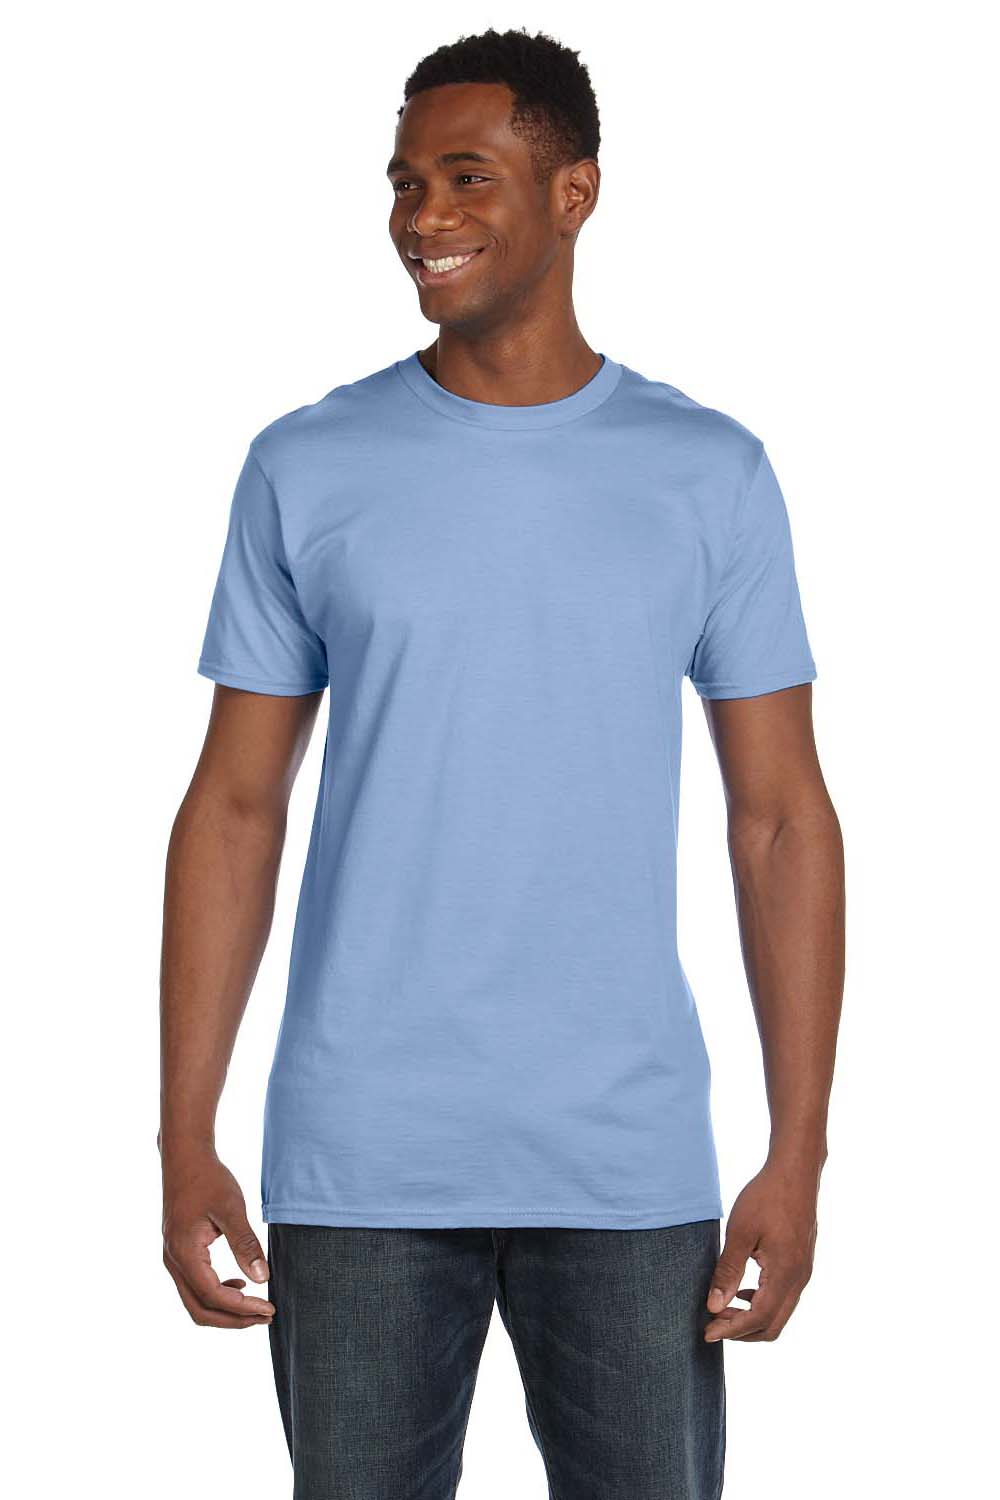 Hanes 4980 Mens Nano-T Short Sleeve Crewneck T-Shirt Light Blue Front